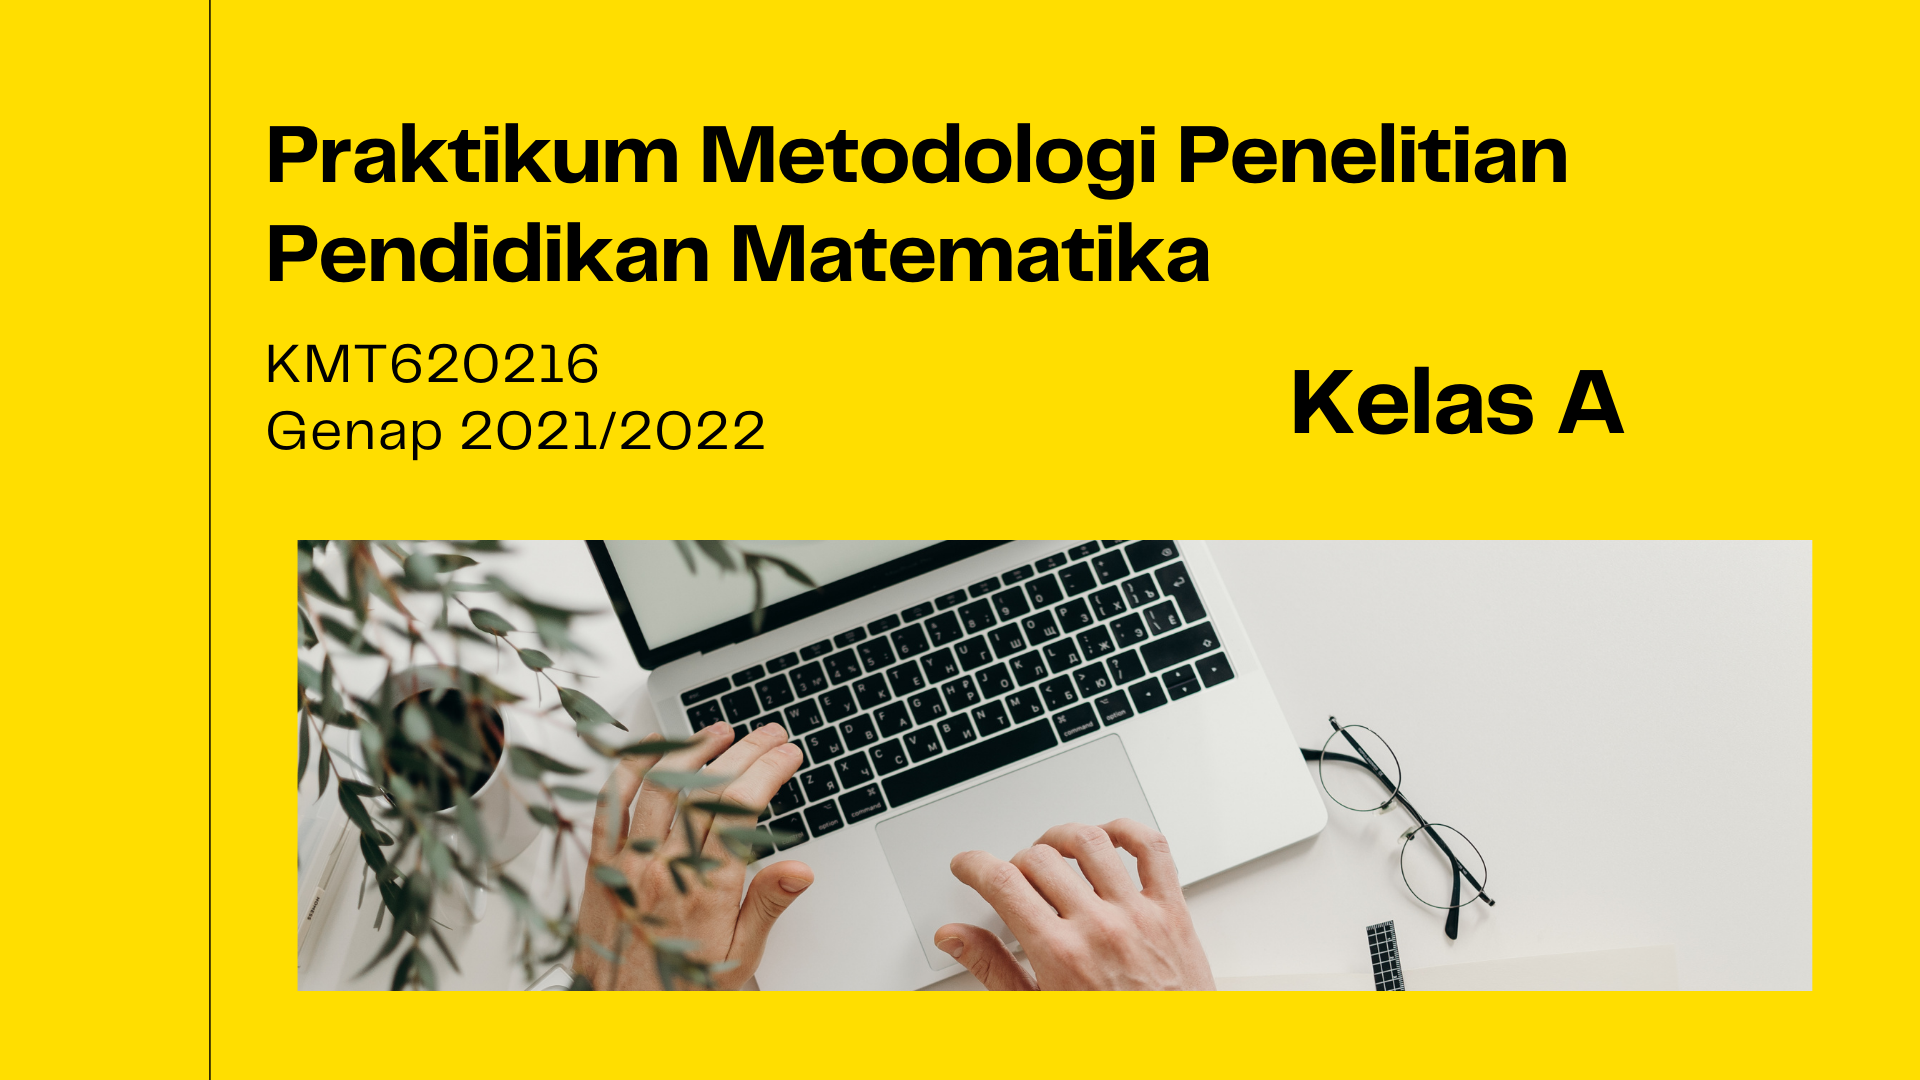 PSPM_Praktikum Metodologi Penelitian Pendidikan Matematika_Kelas A_Genap 2021/2022